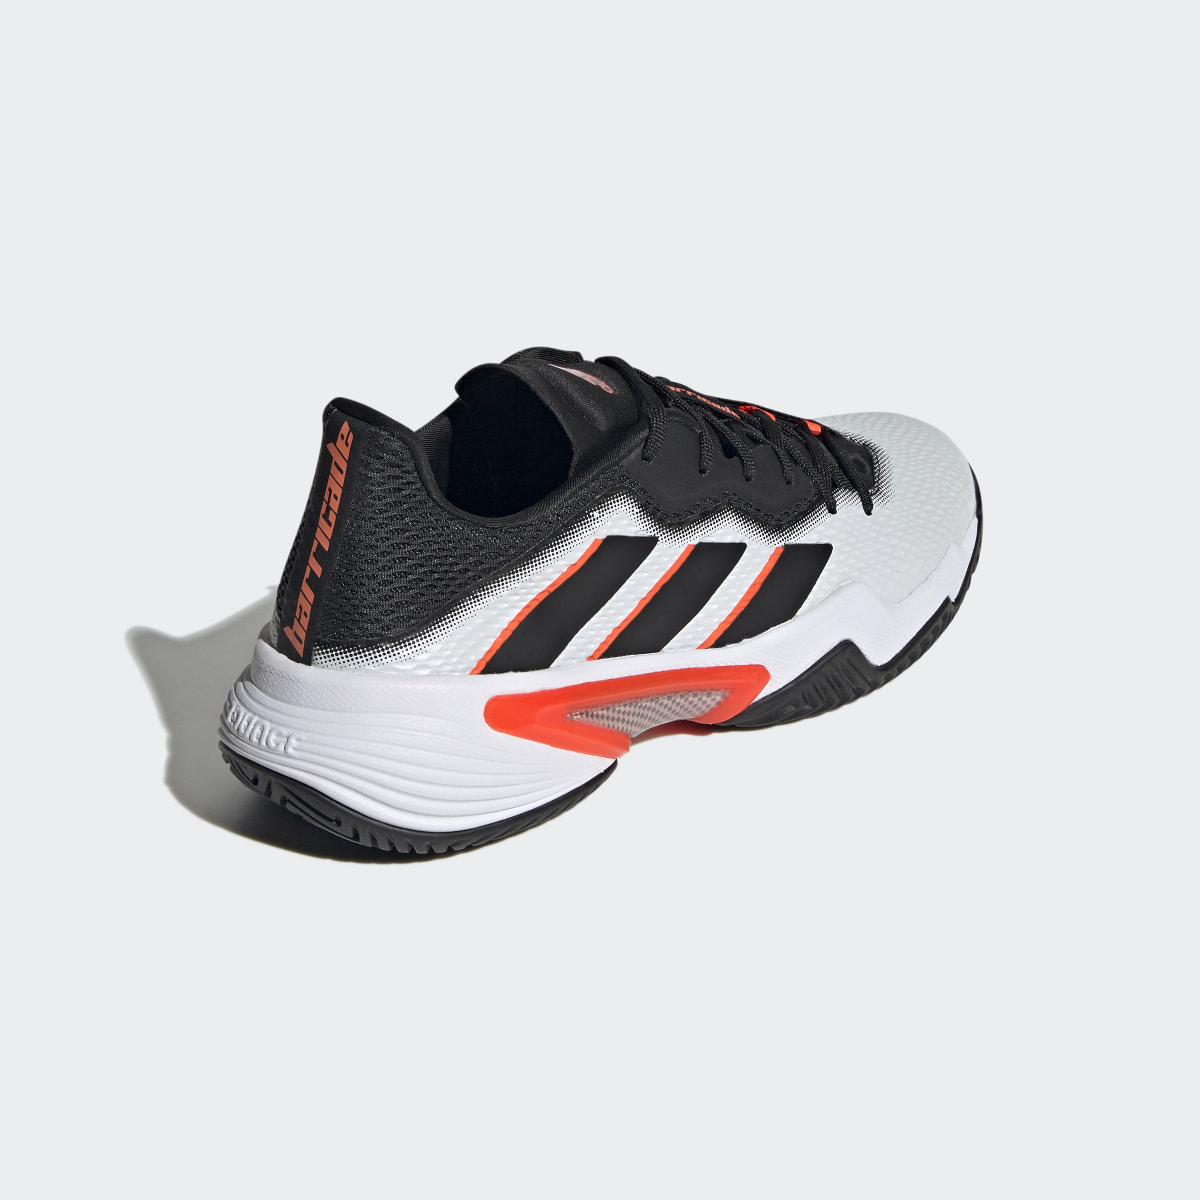 Adidas Barricade Tennis Shoes. 7